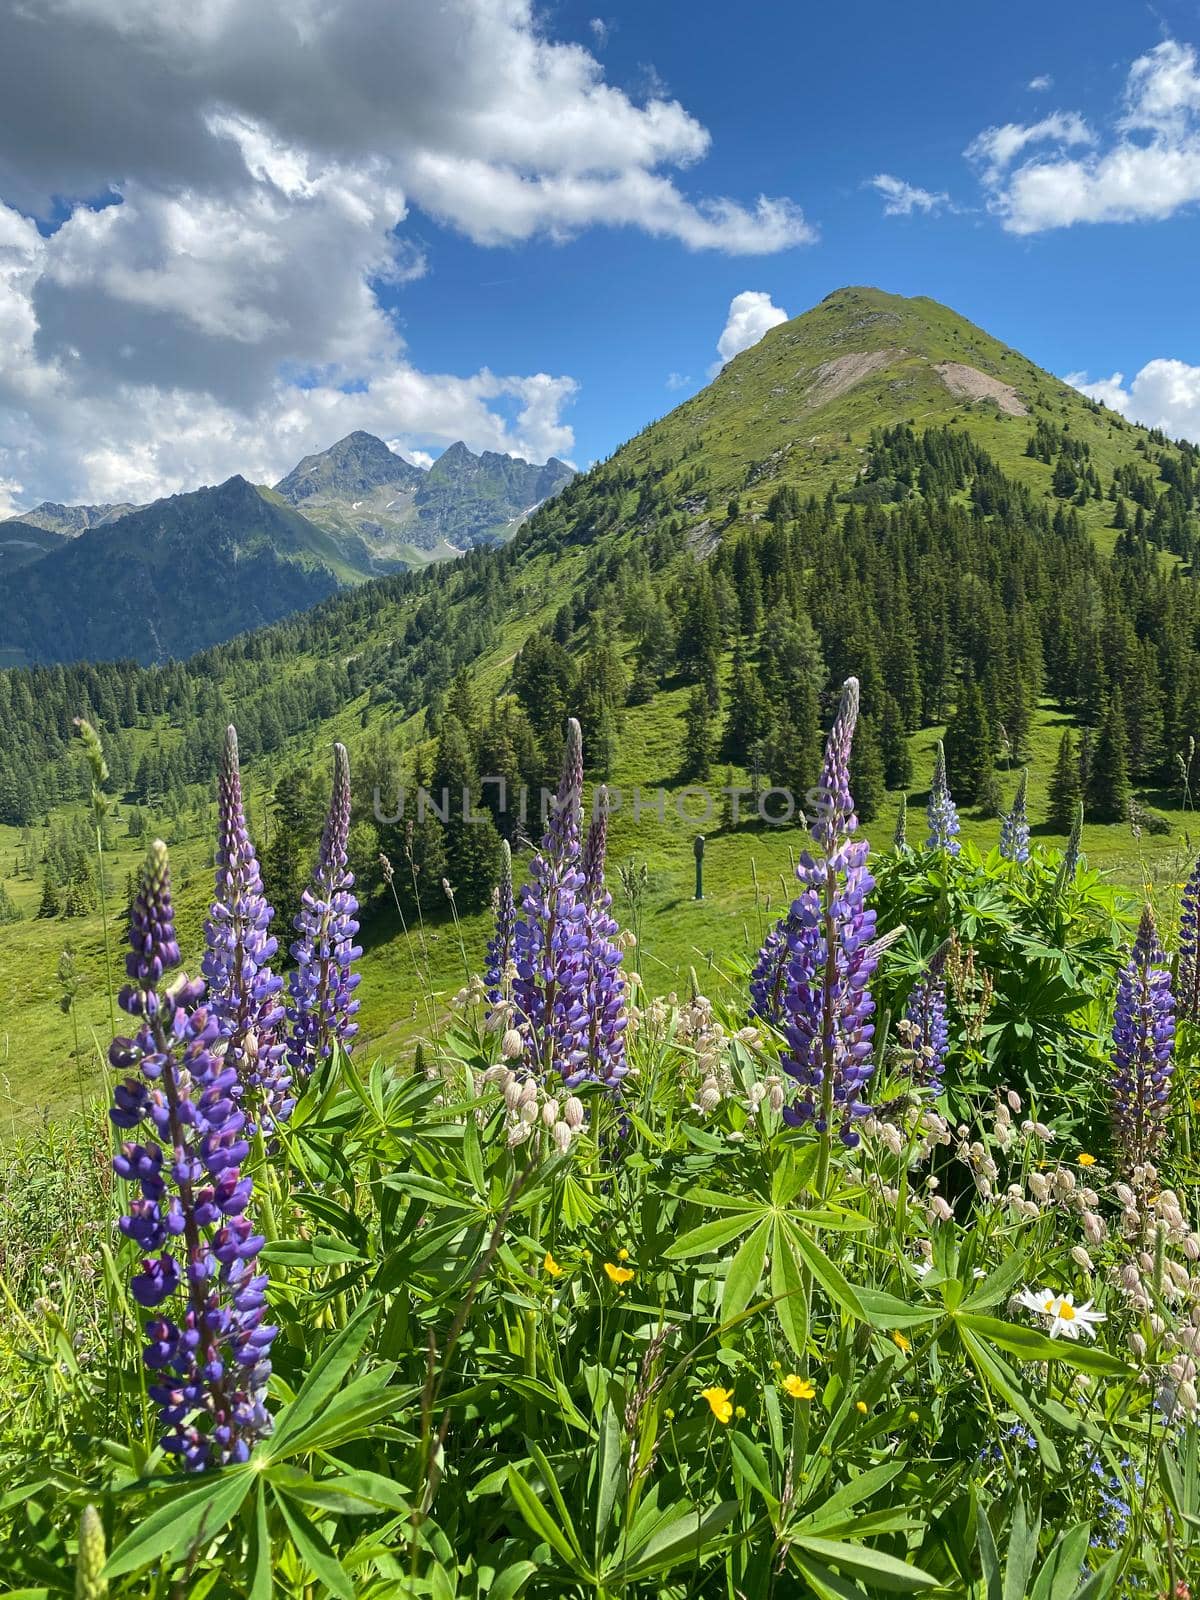 Summer scenery near the Krahbergzinken mountain, Austria by CaptureLight